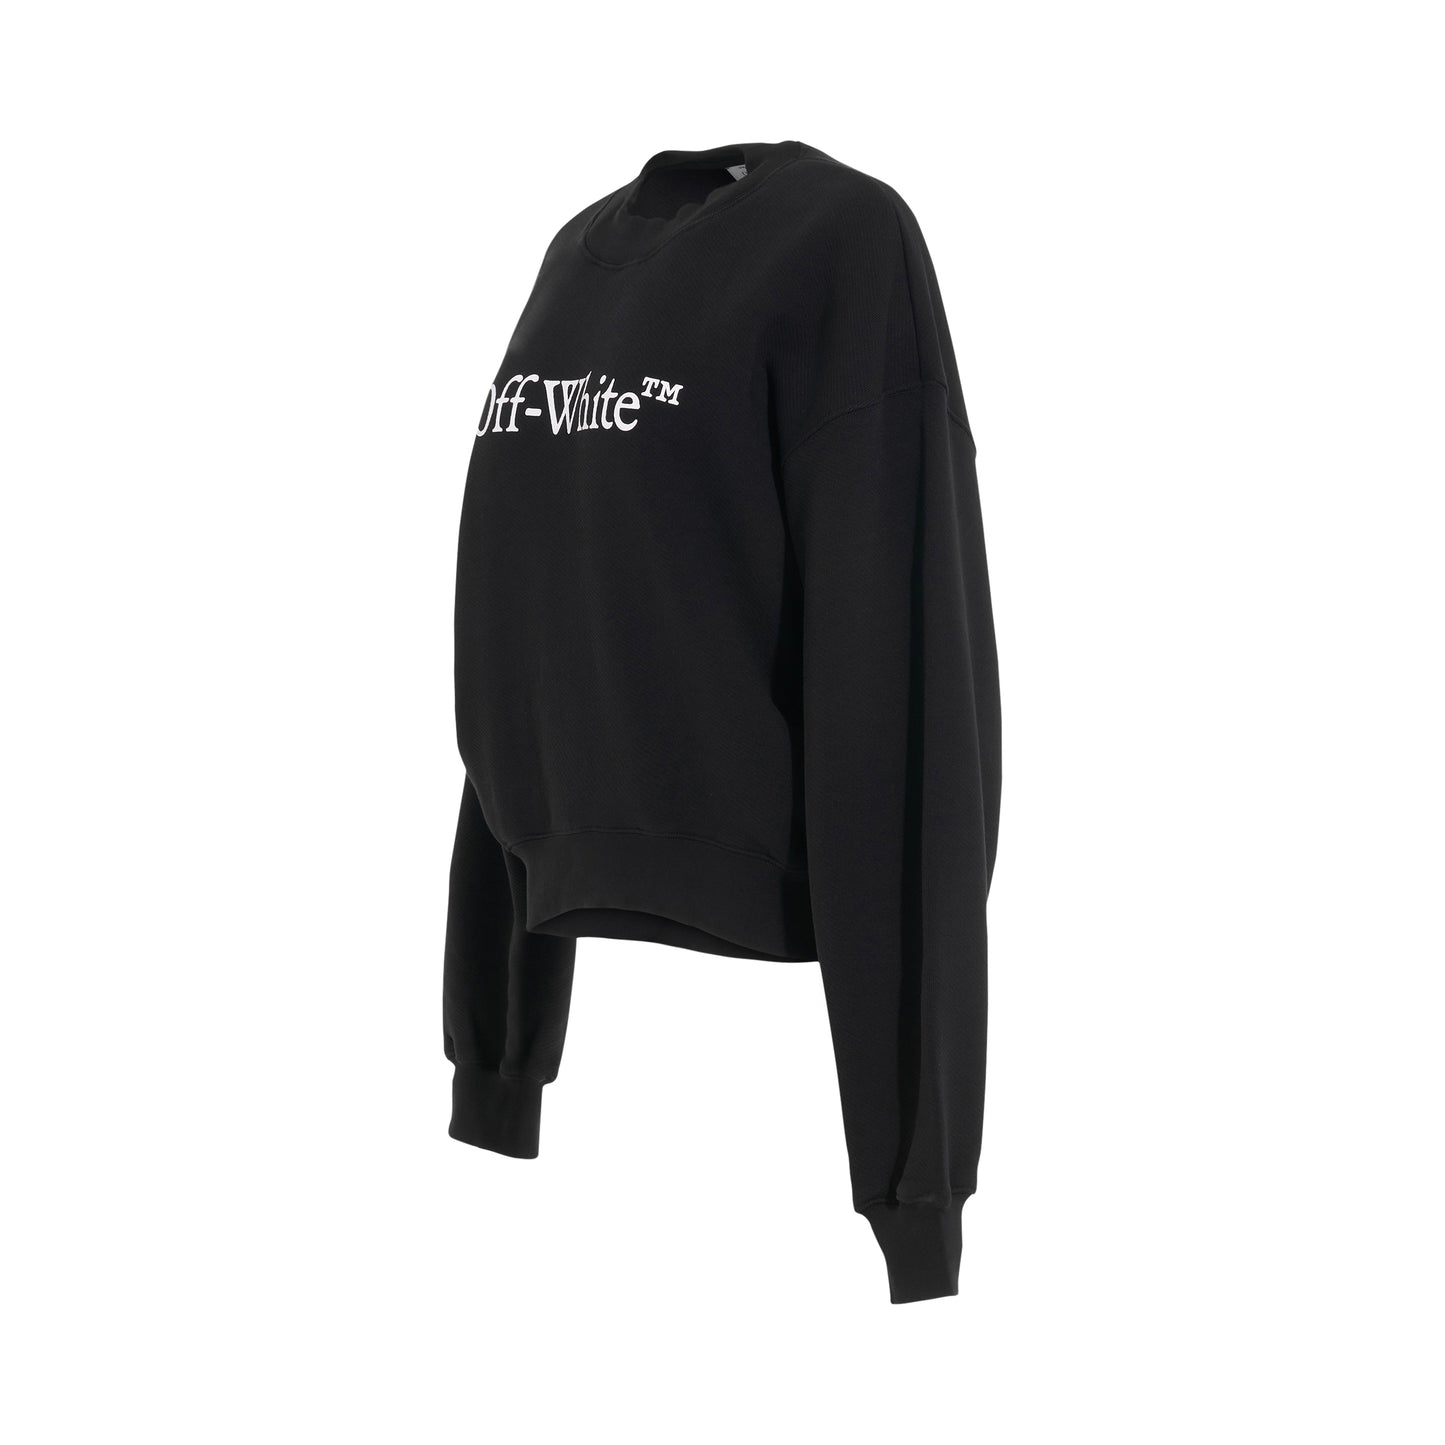 Big Logo Bookish Oversize Sweatshirt in Black